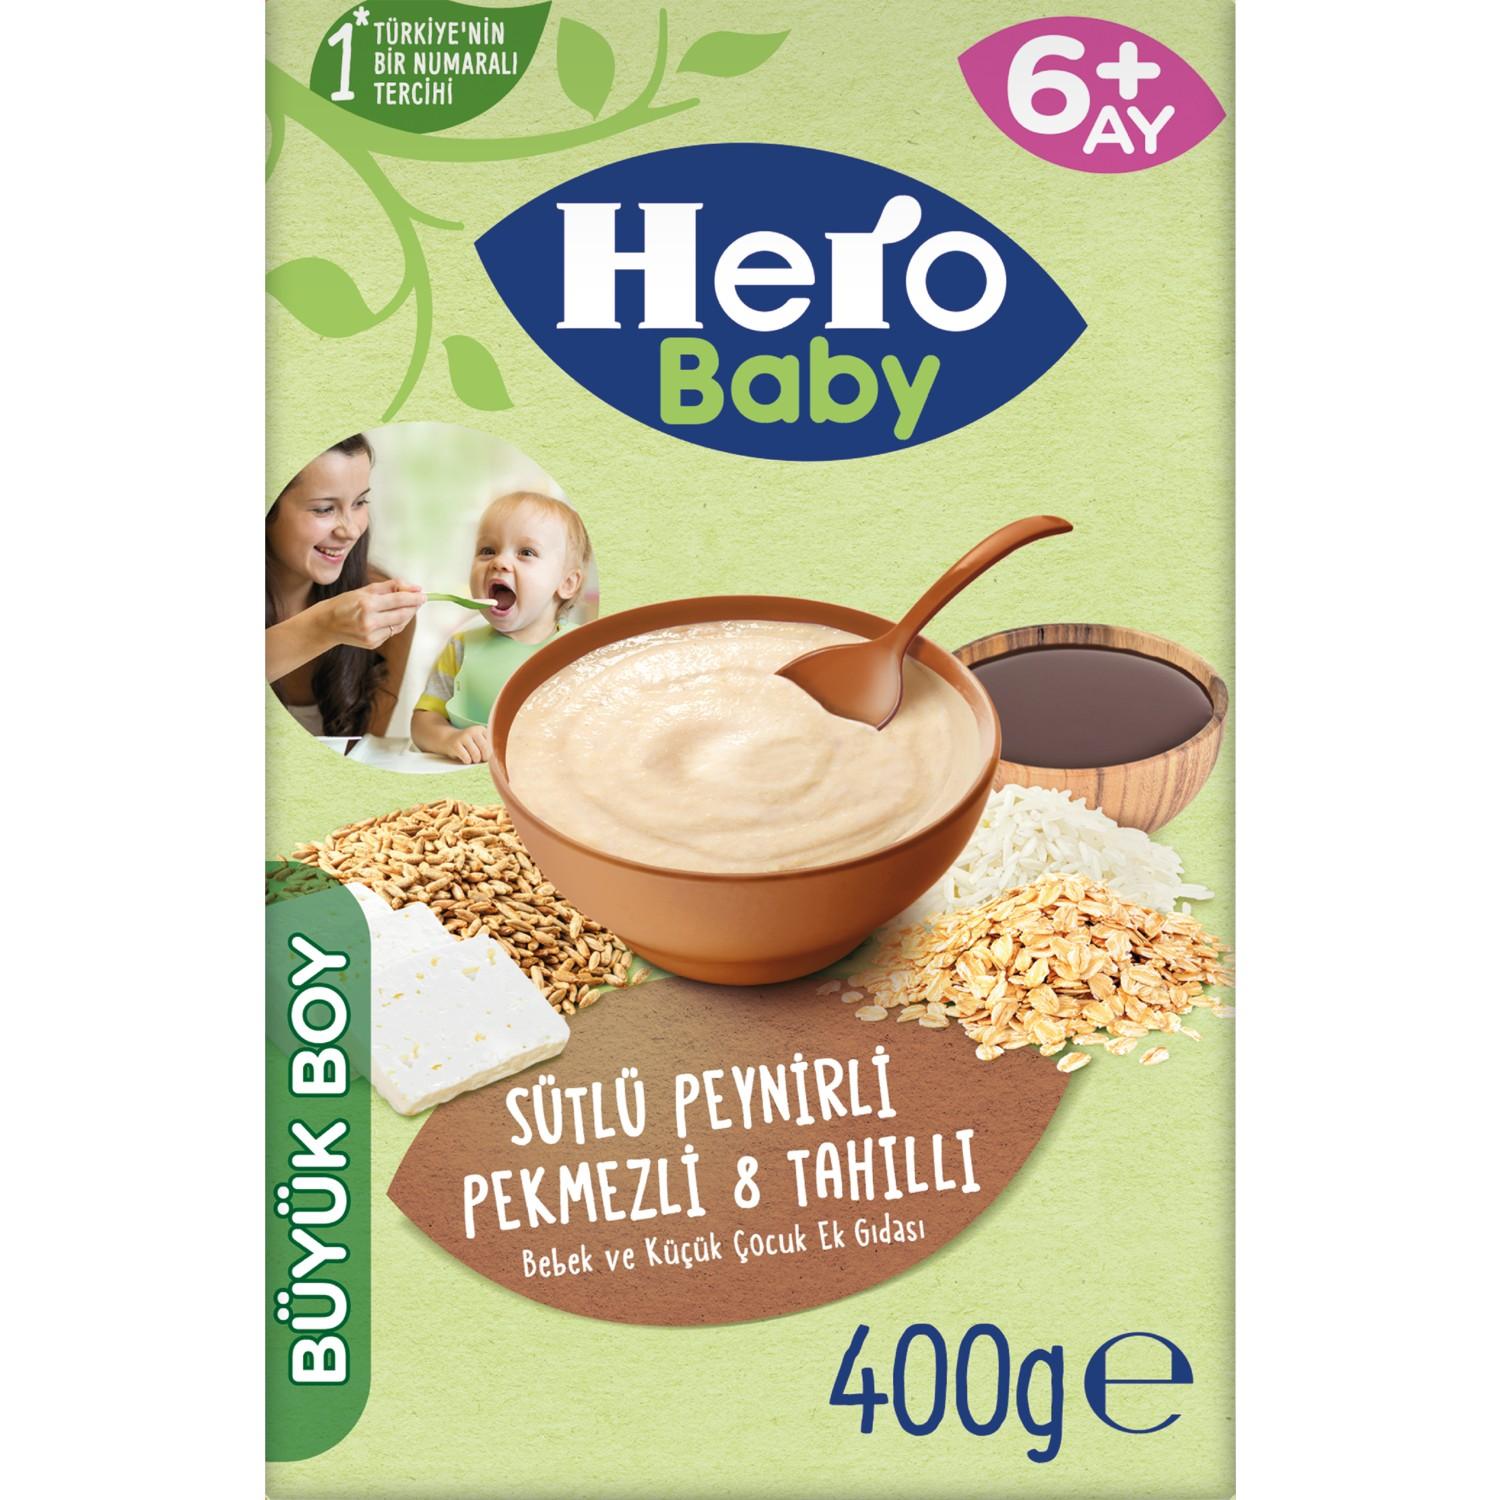 Hero Baby Sütlü Peynirli Pekmezli 8 Tahıllı Kaşık Mama 400 gr 3'lü Paket